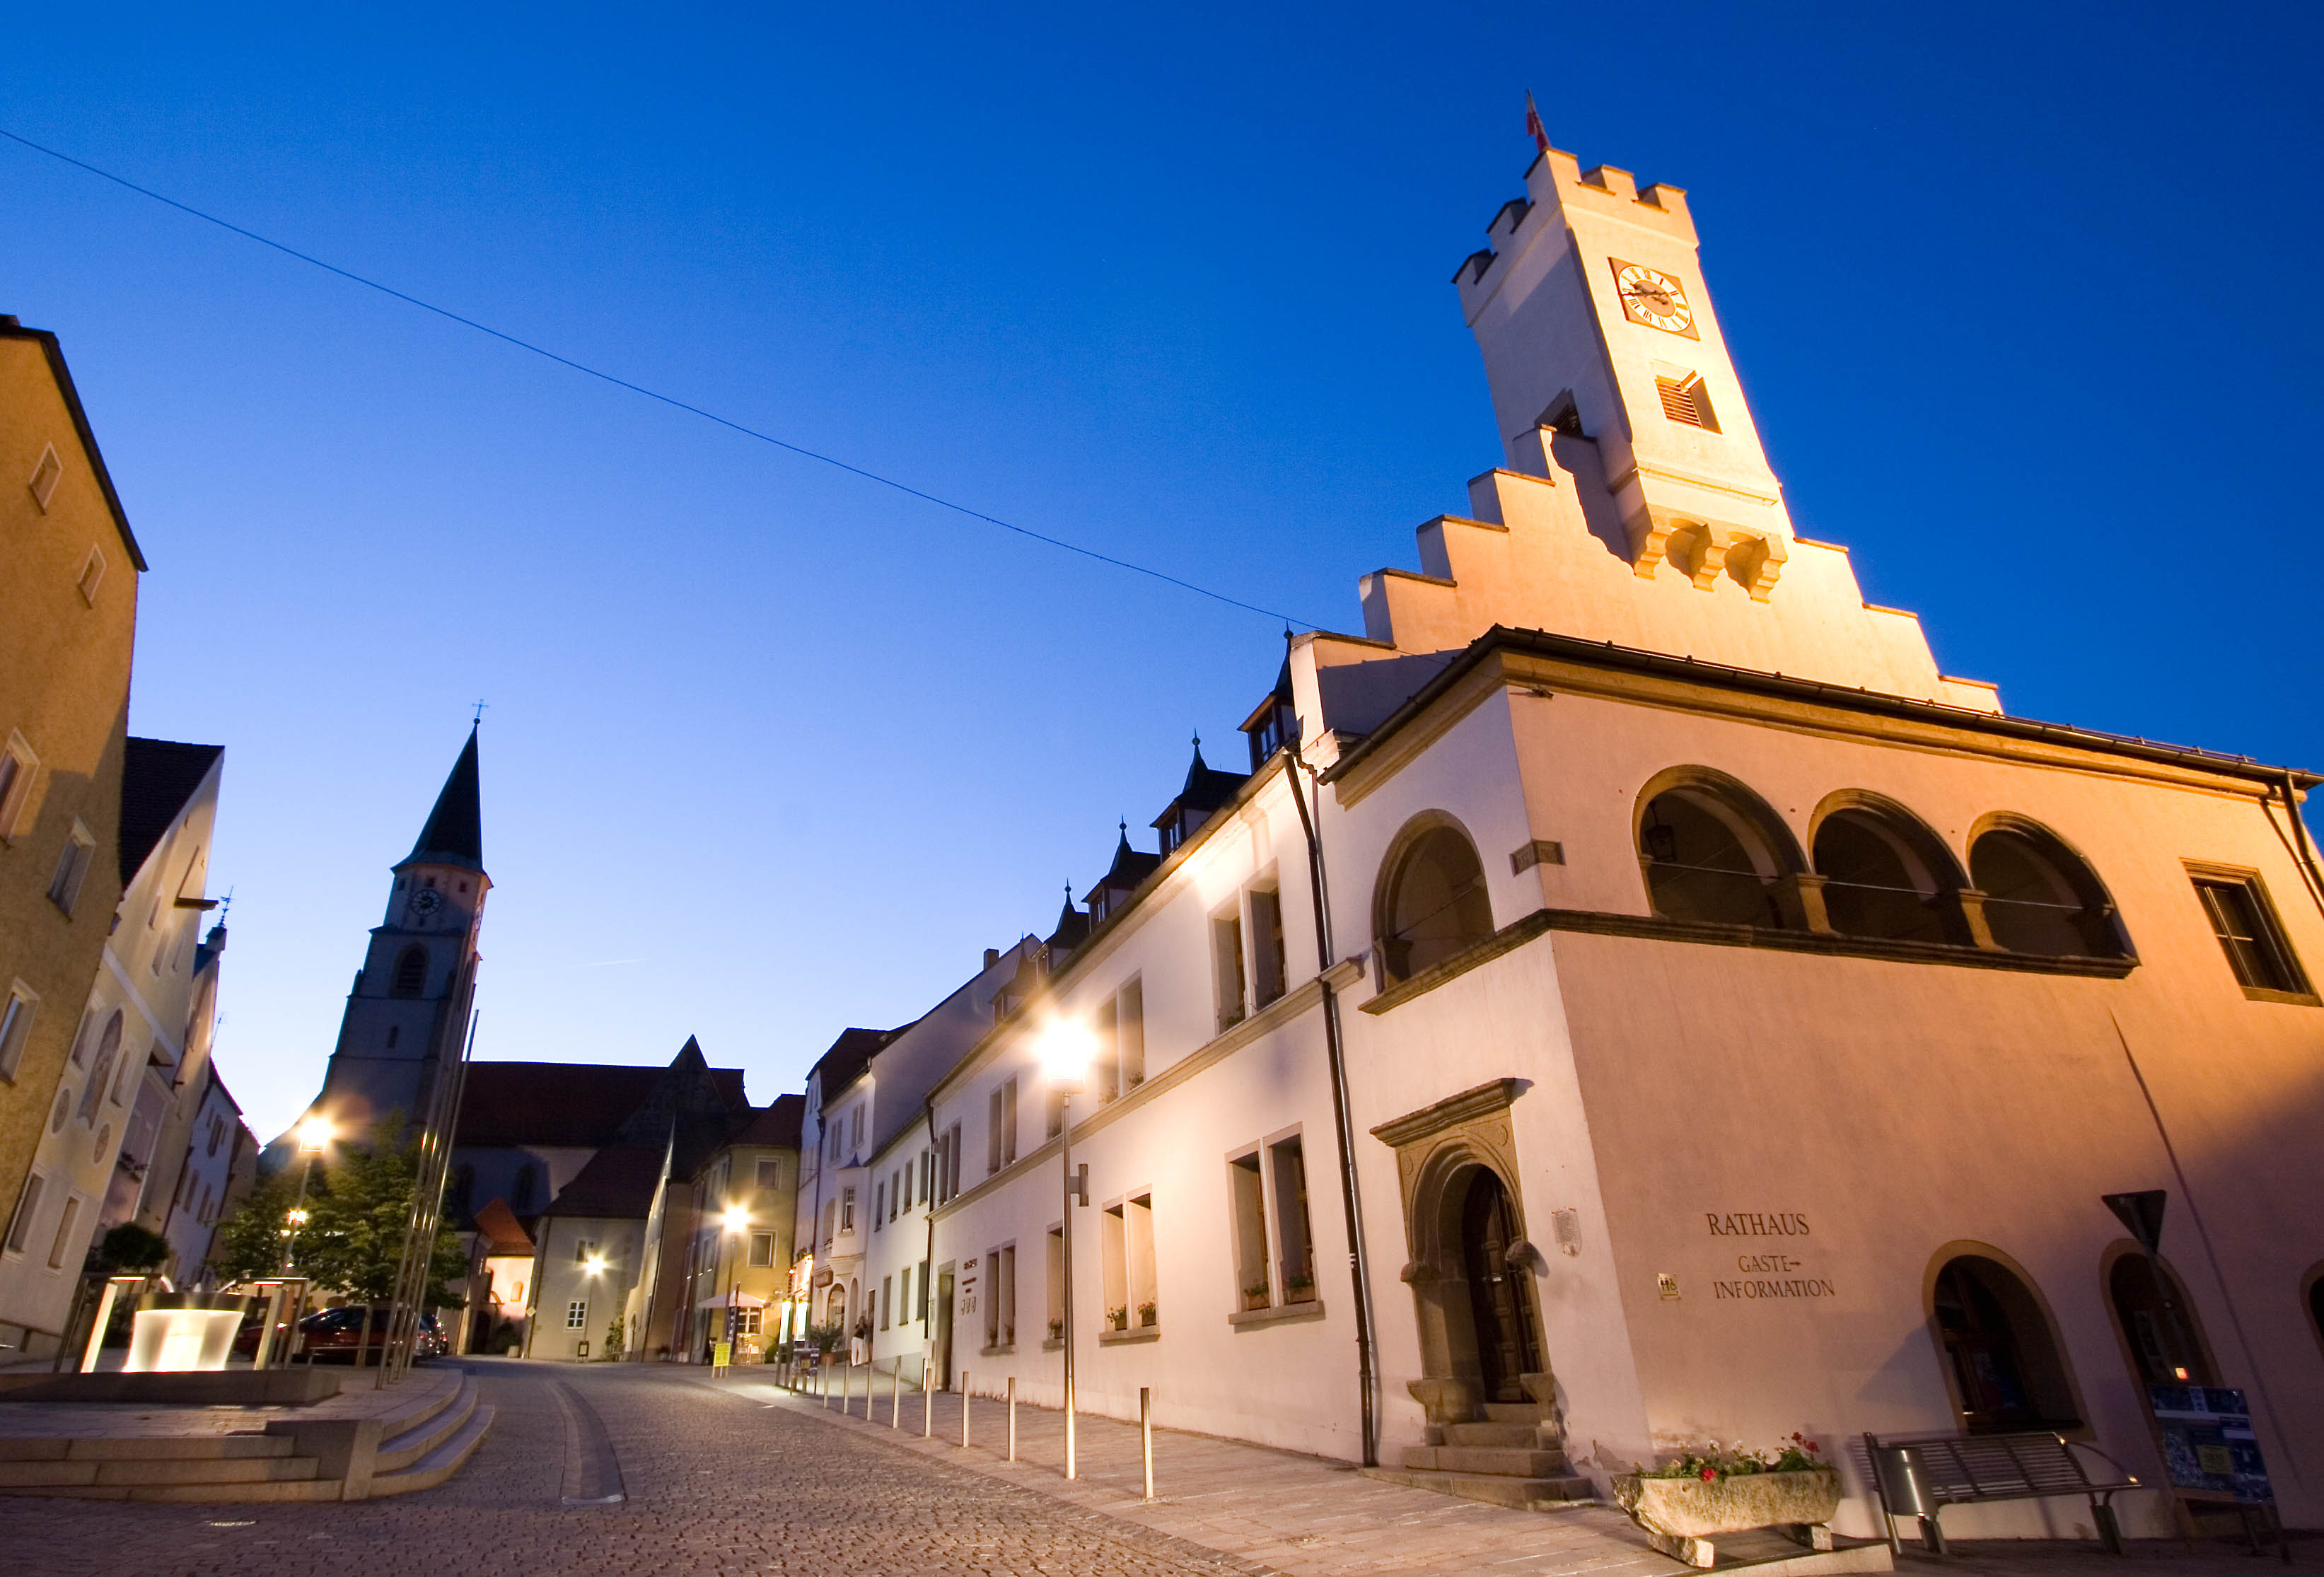 Rathaus Nabburg am Abend.